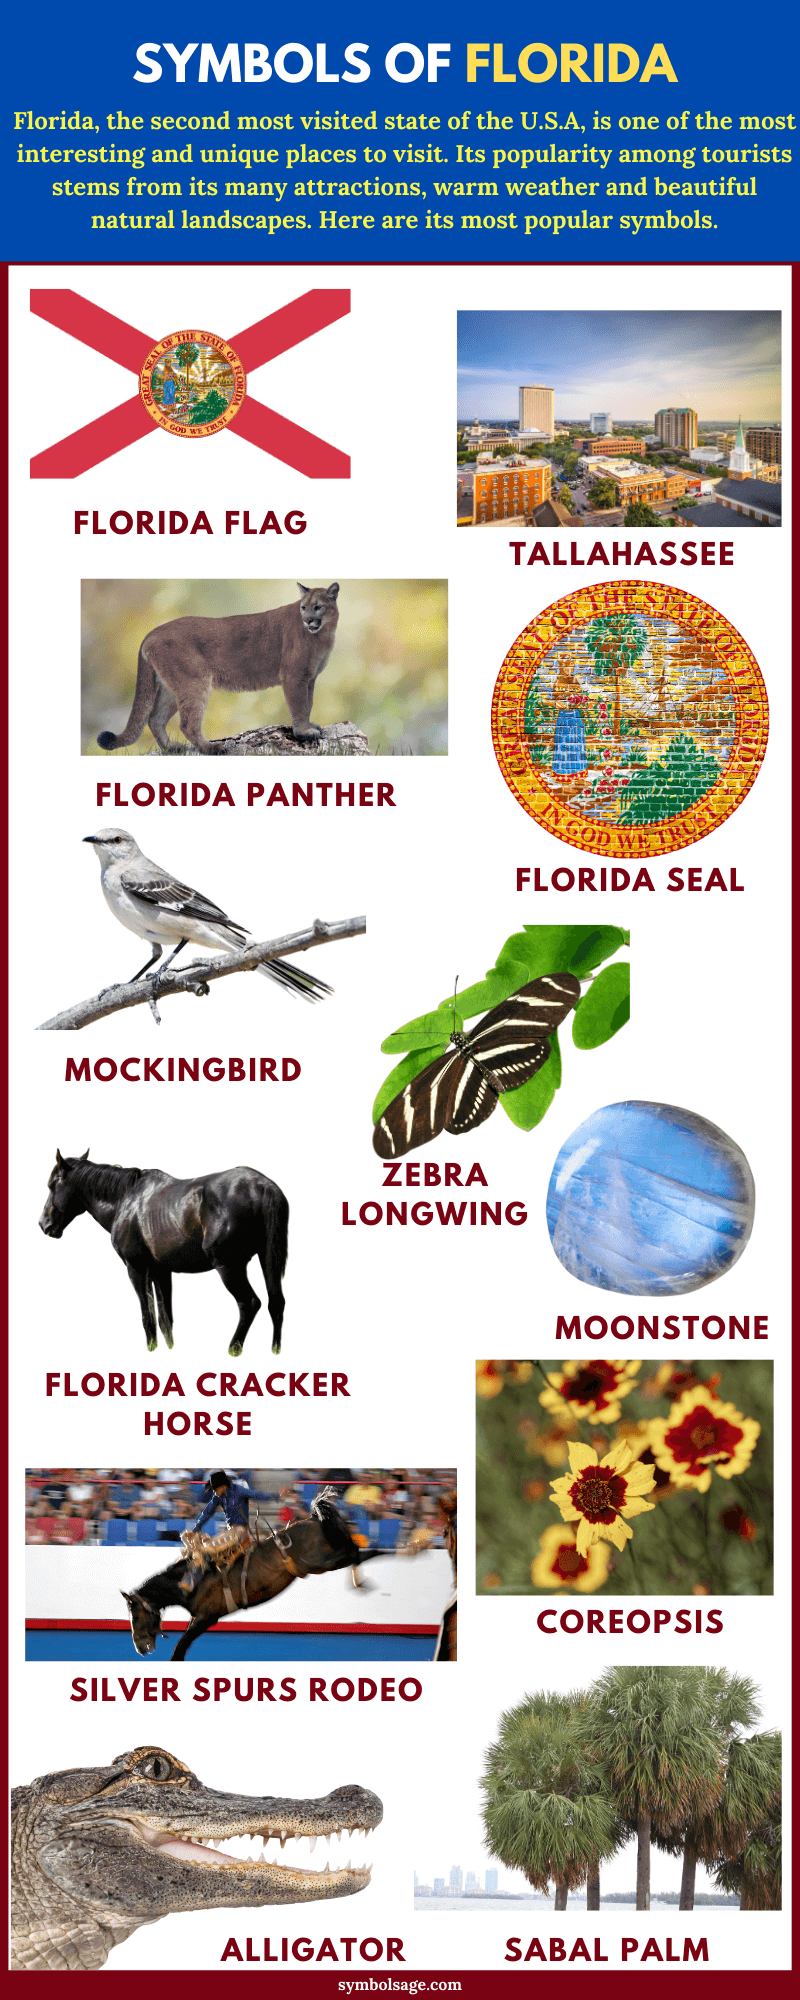 Symbols of Florida (A List) - Symbol Sage